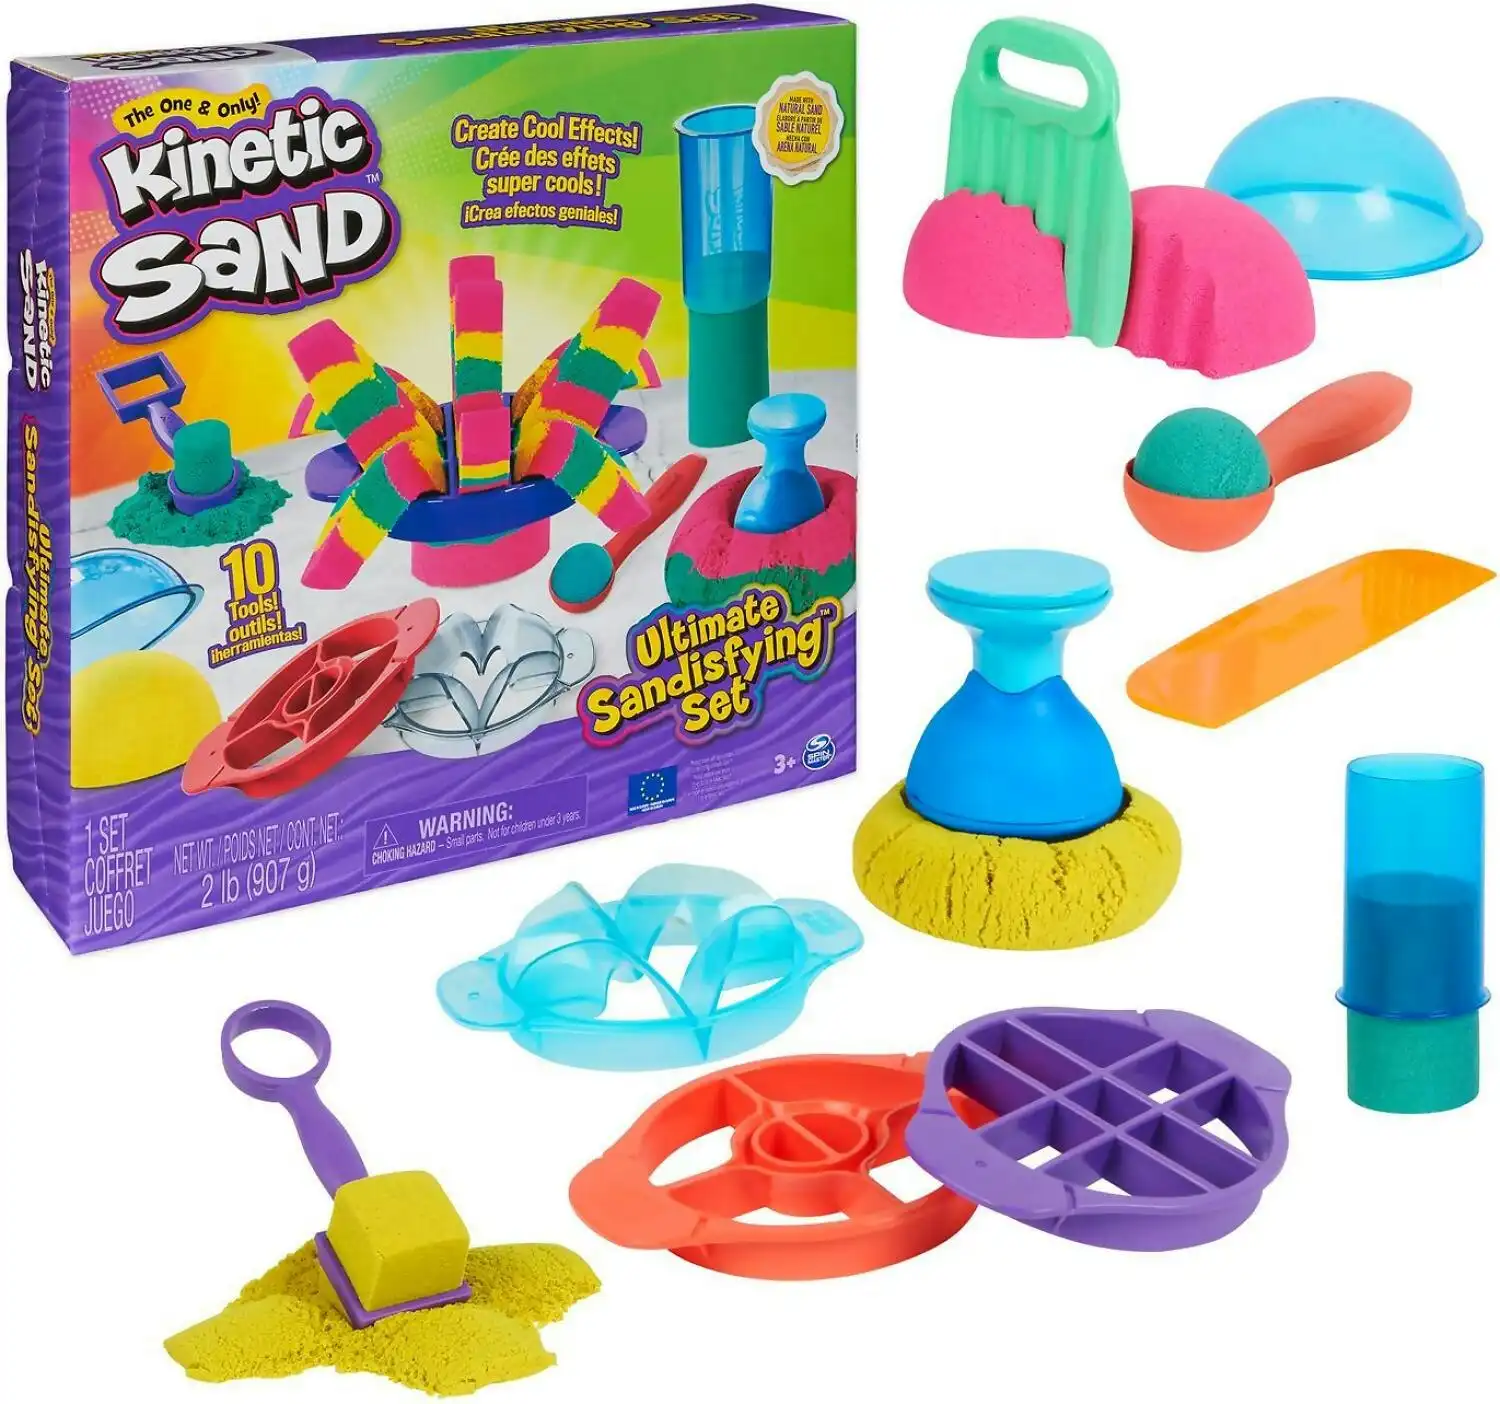 Kinetic Sand - Ultimate Sandisfying Set - Spin Master